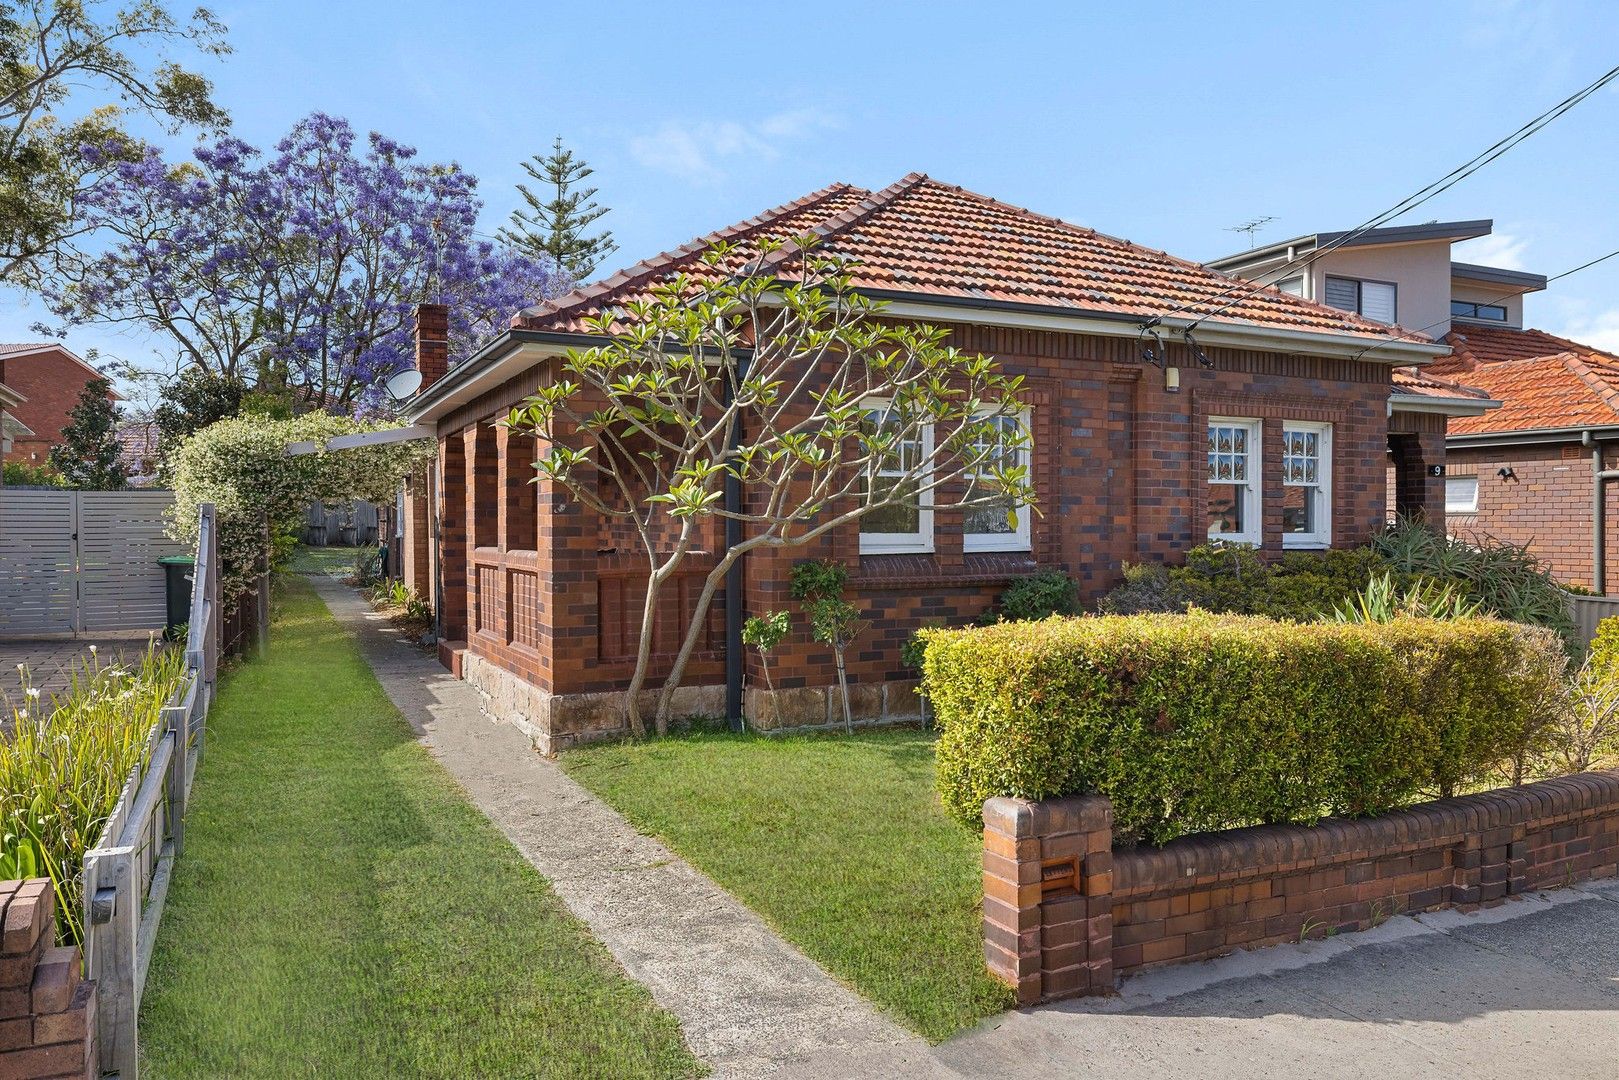 2 bedrooms House in 7 Walsh Avenue MAROUBRA NSW, 2035